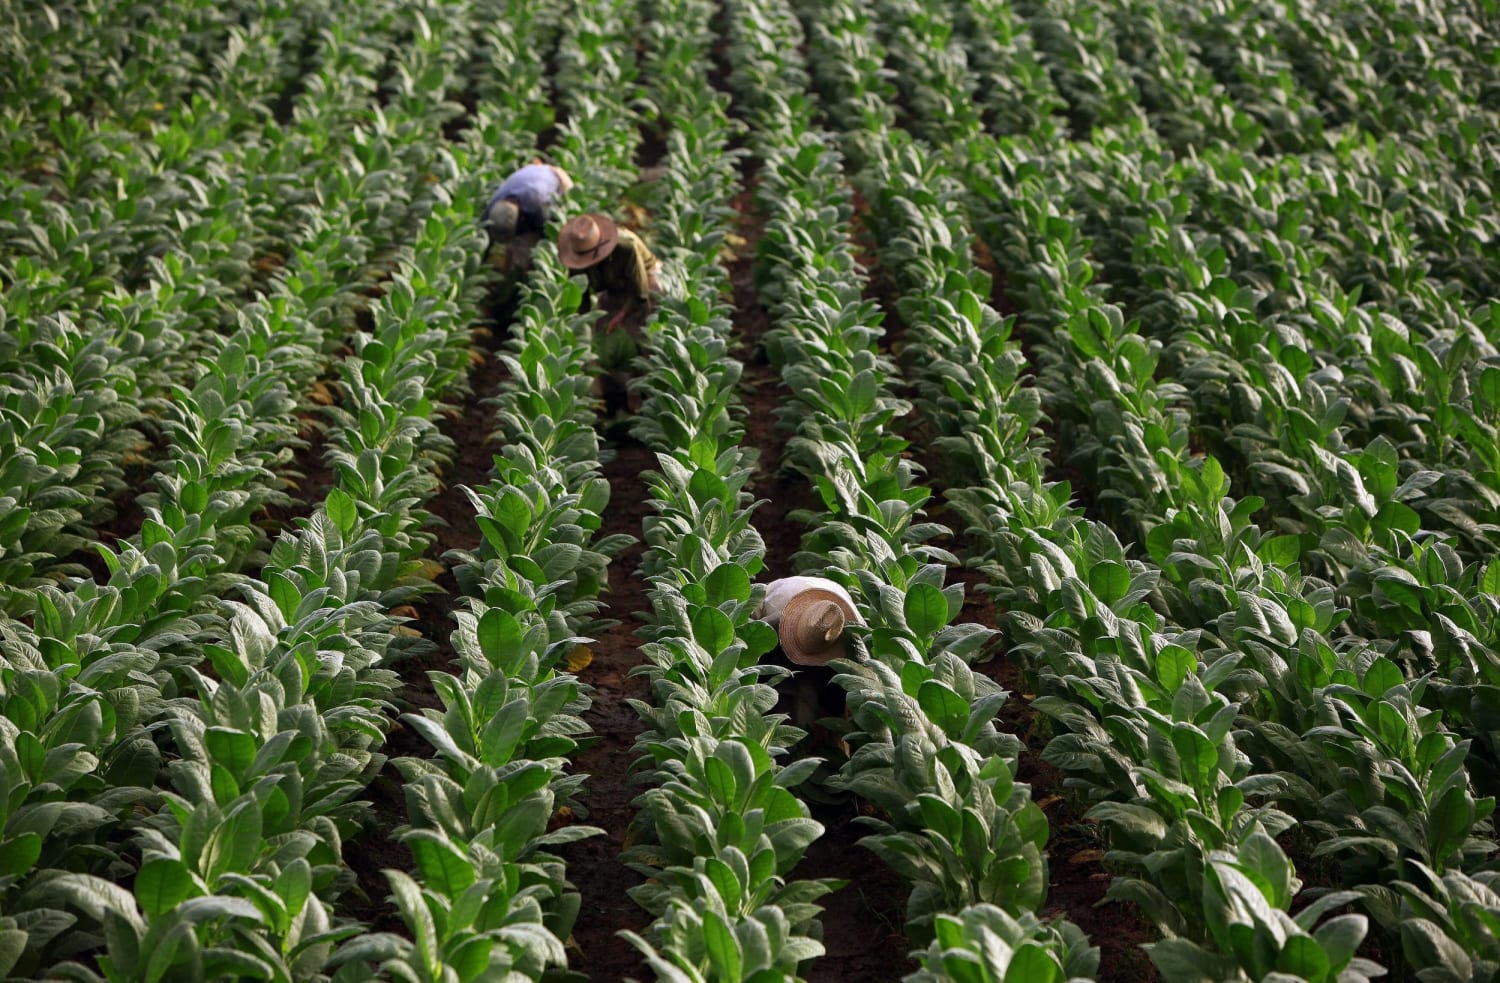 tobacco plantations